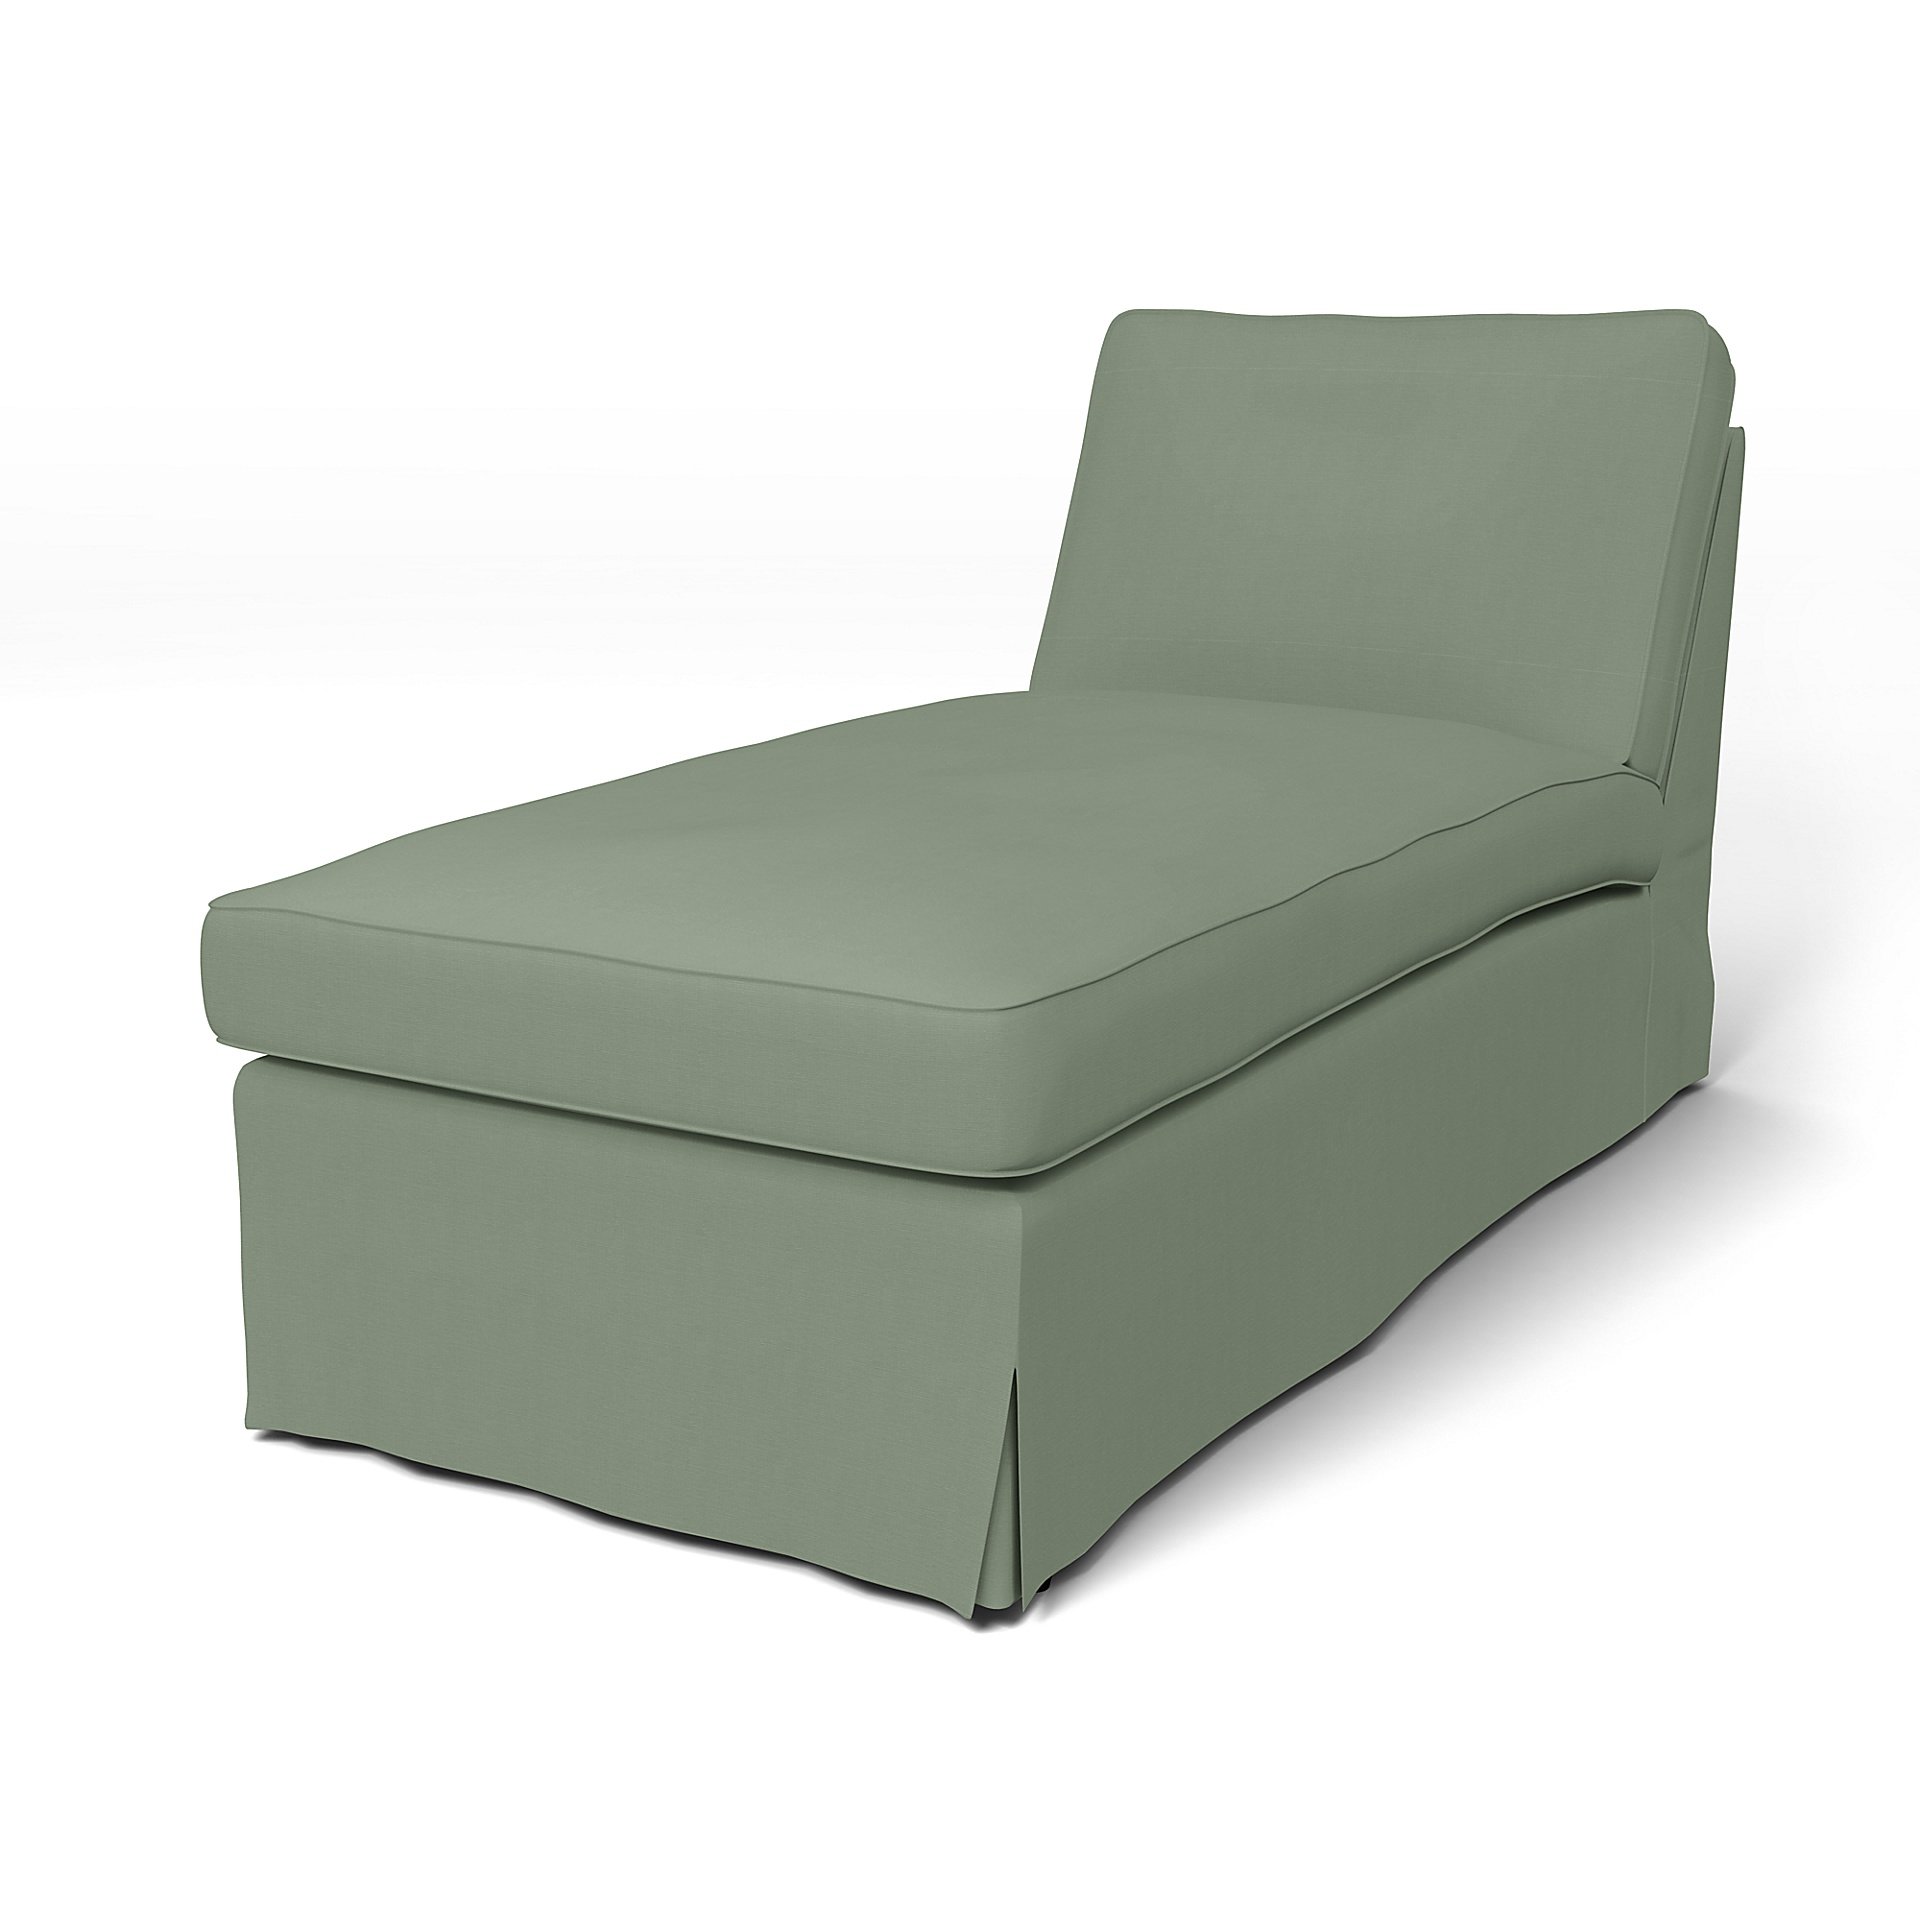 IKEA - Ektorp Chaise Longue Cover, Seagrass, Cotton - Bemz